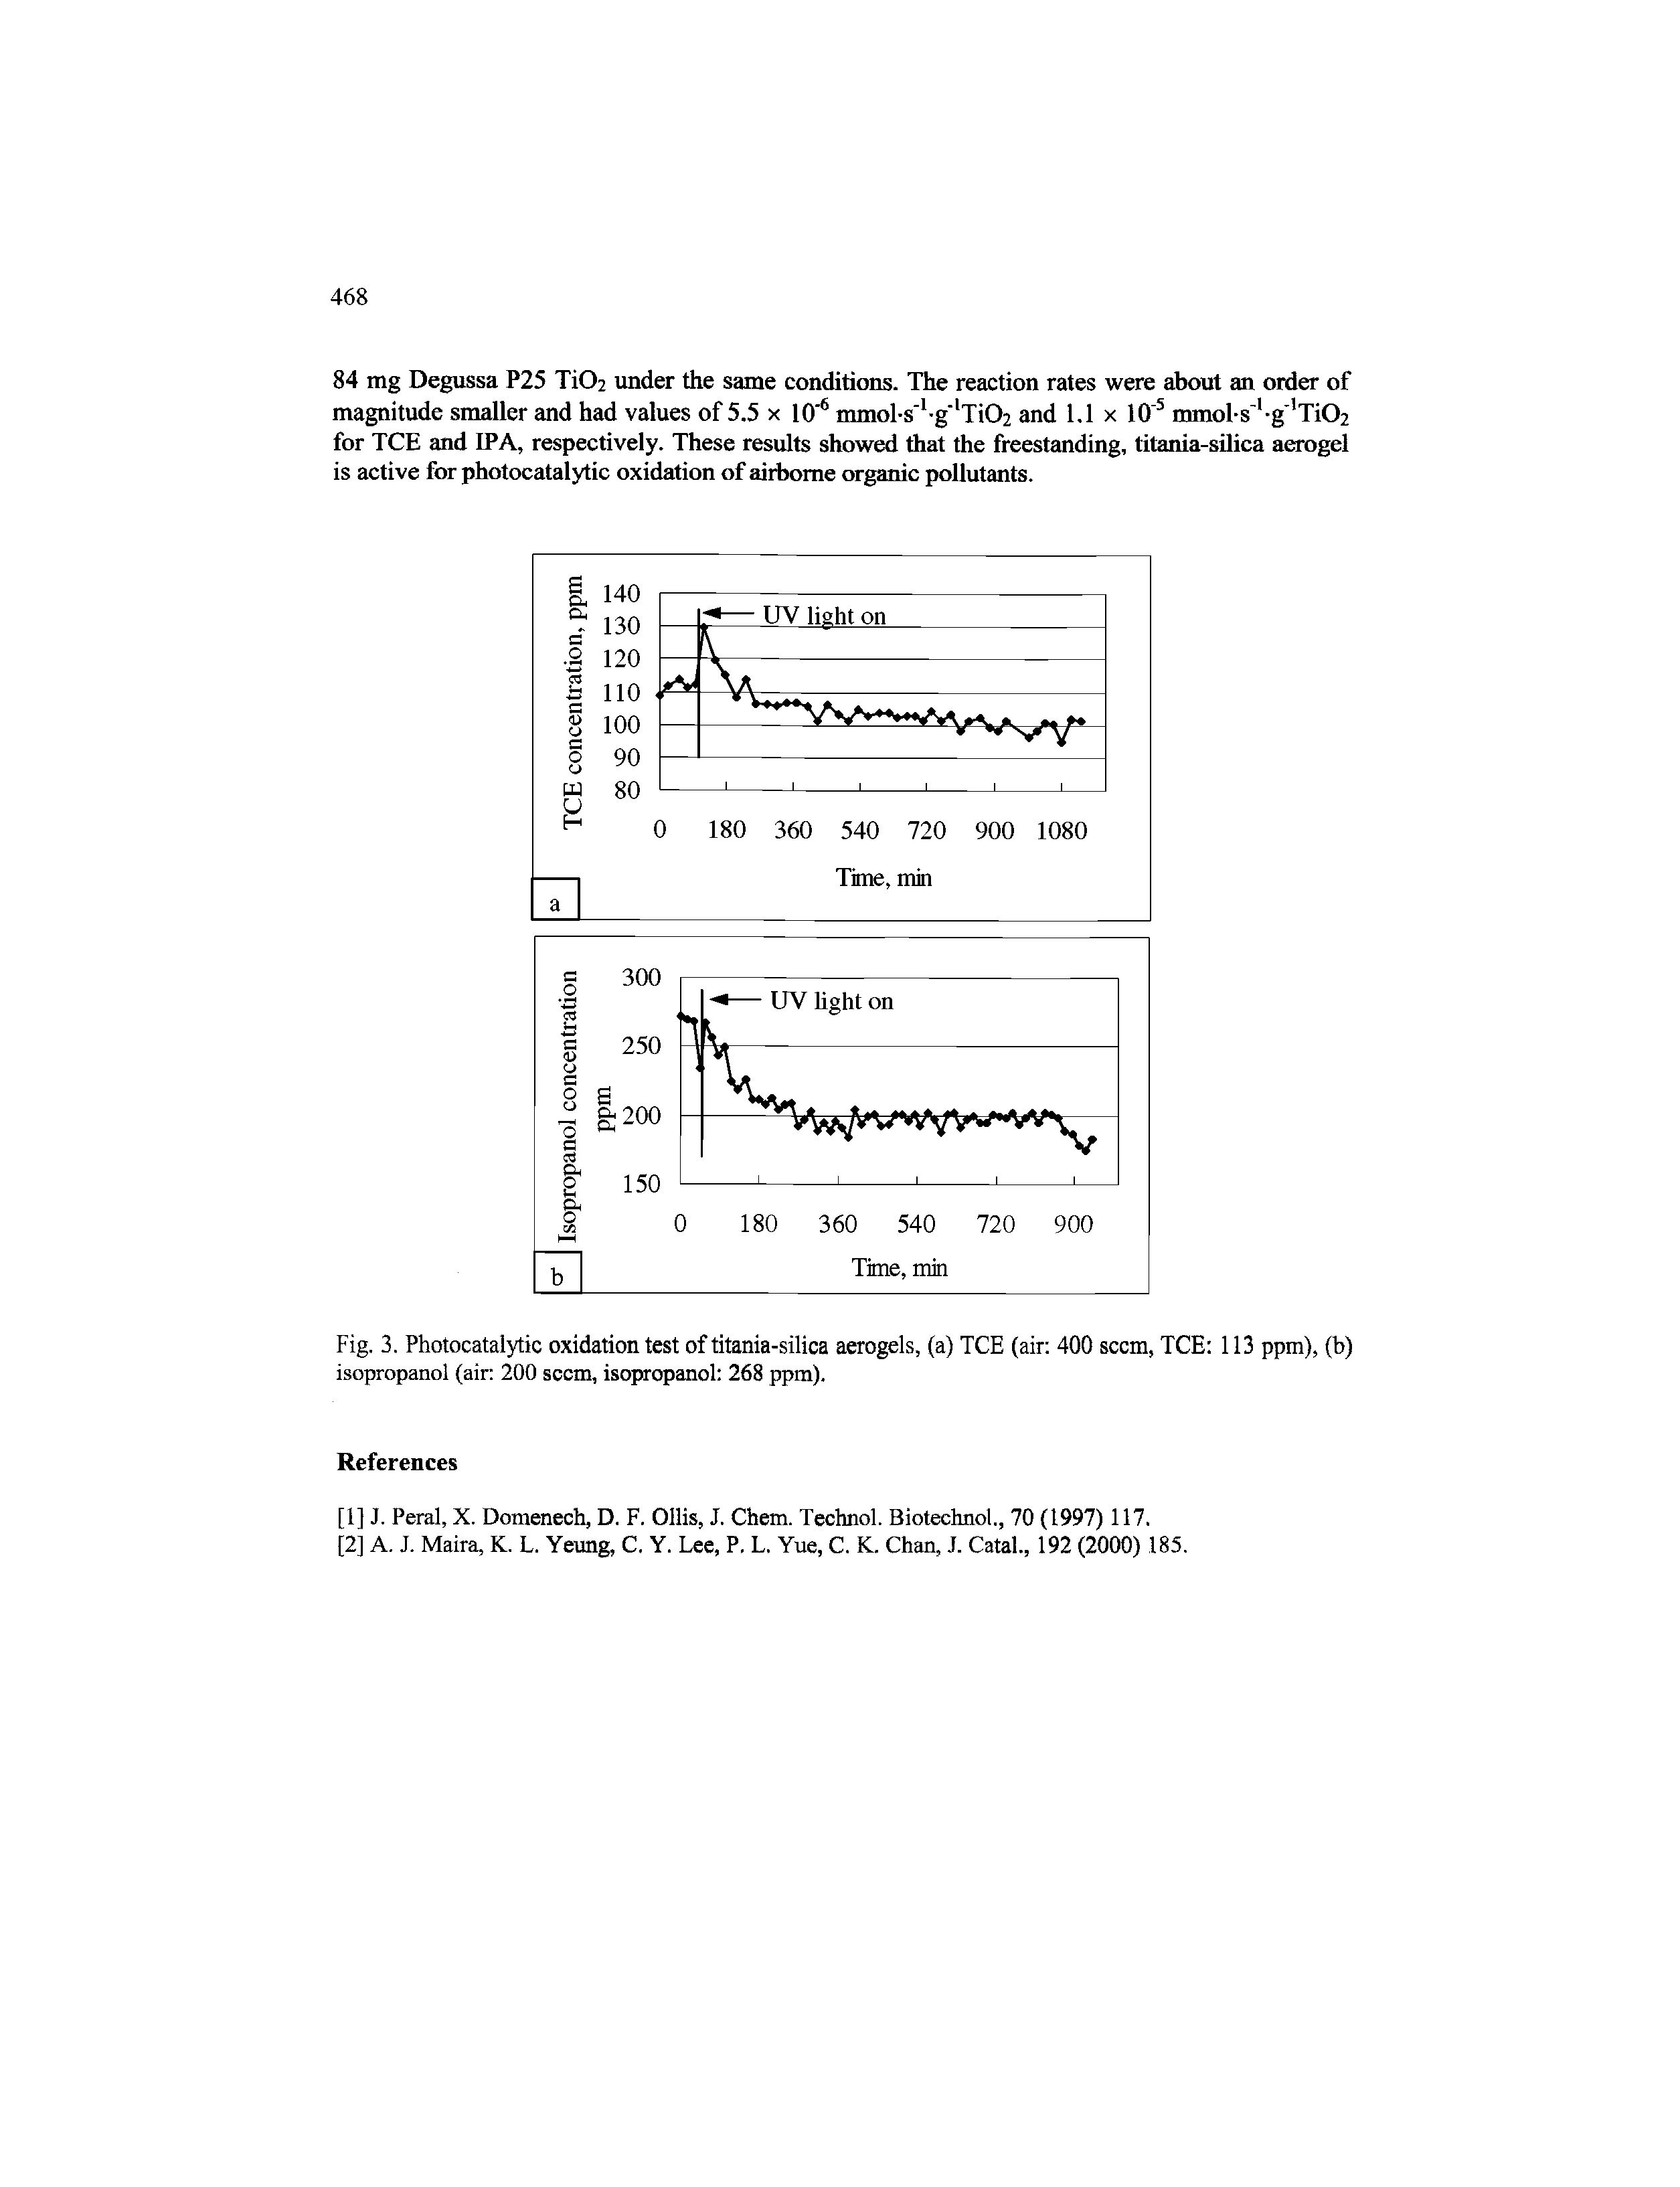 Fig. 3. Photocatalytic oxidation test of titania-silica aerogels, (a) TCE (air 400 seem, TCE 113 ppm), (b) isopropanol (air 200 seem, isopropanol 268 ppm).